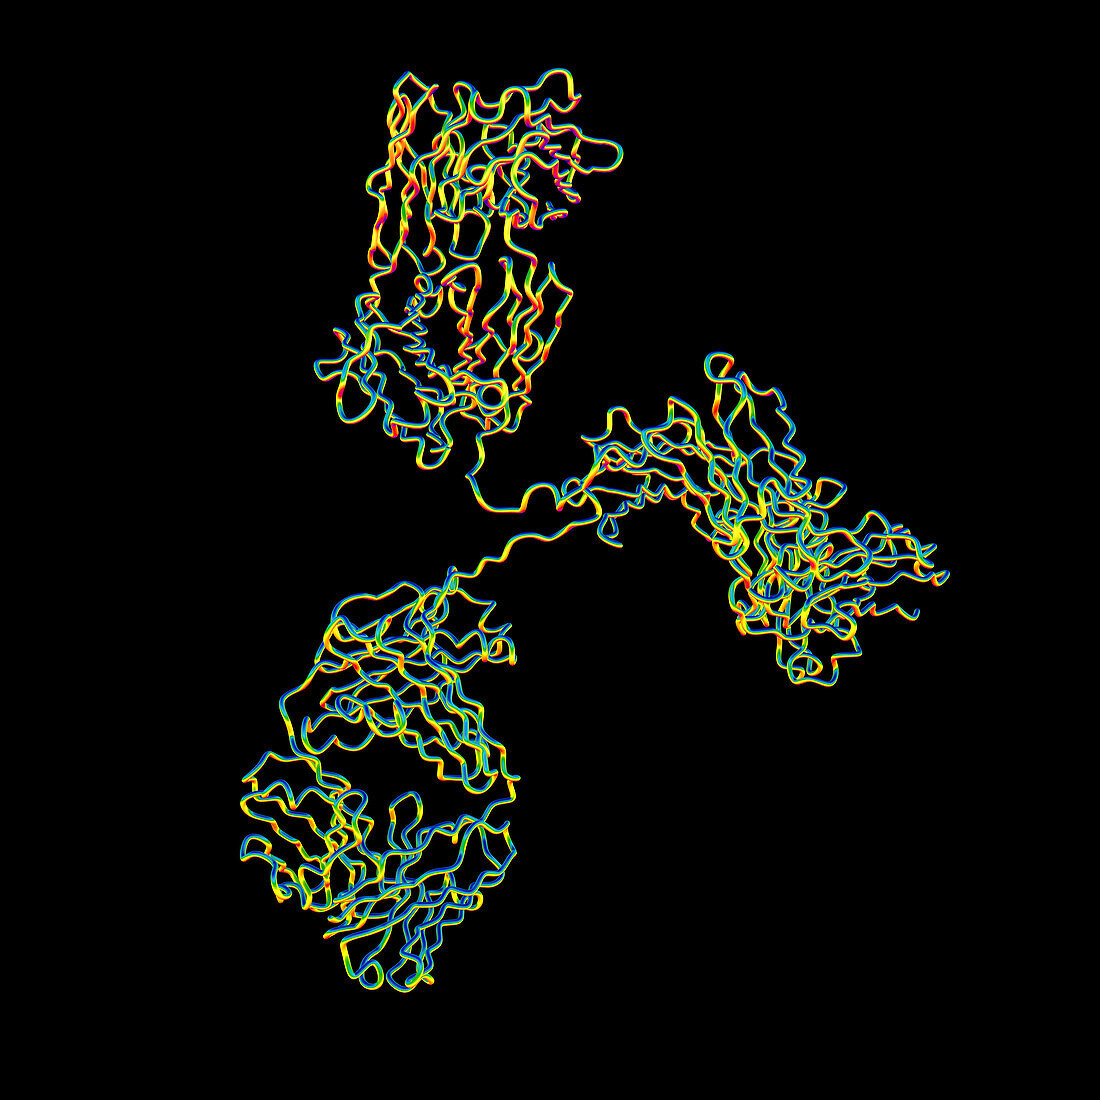 Immunoglobulin G antibody, molecular model